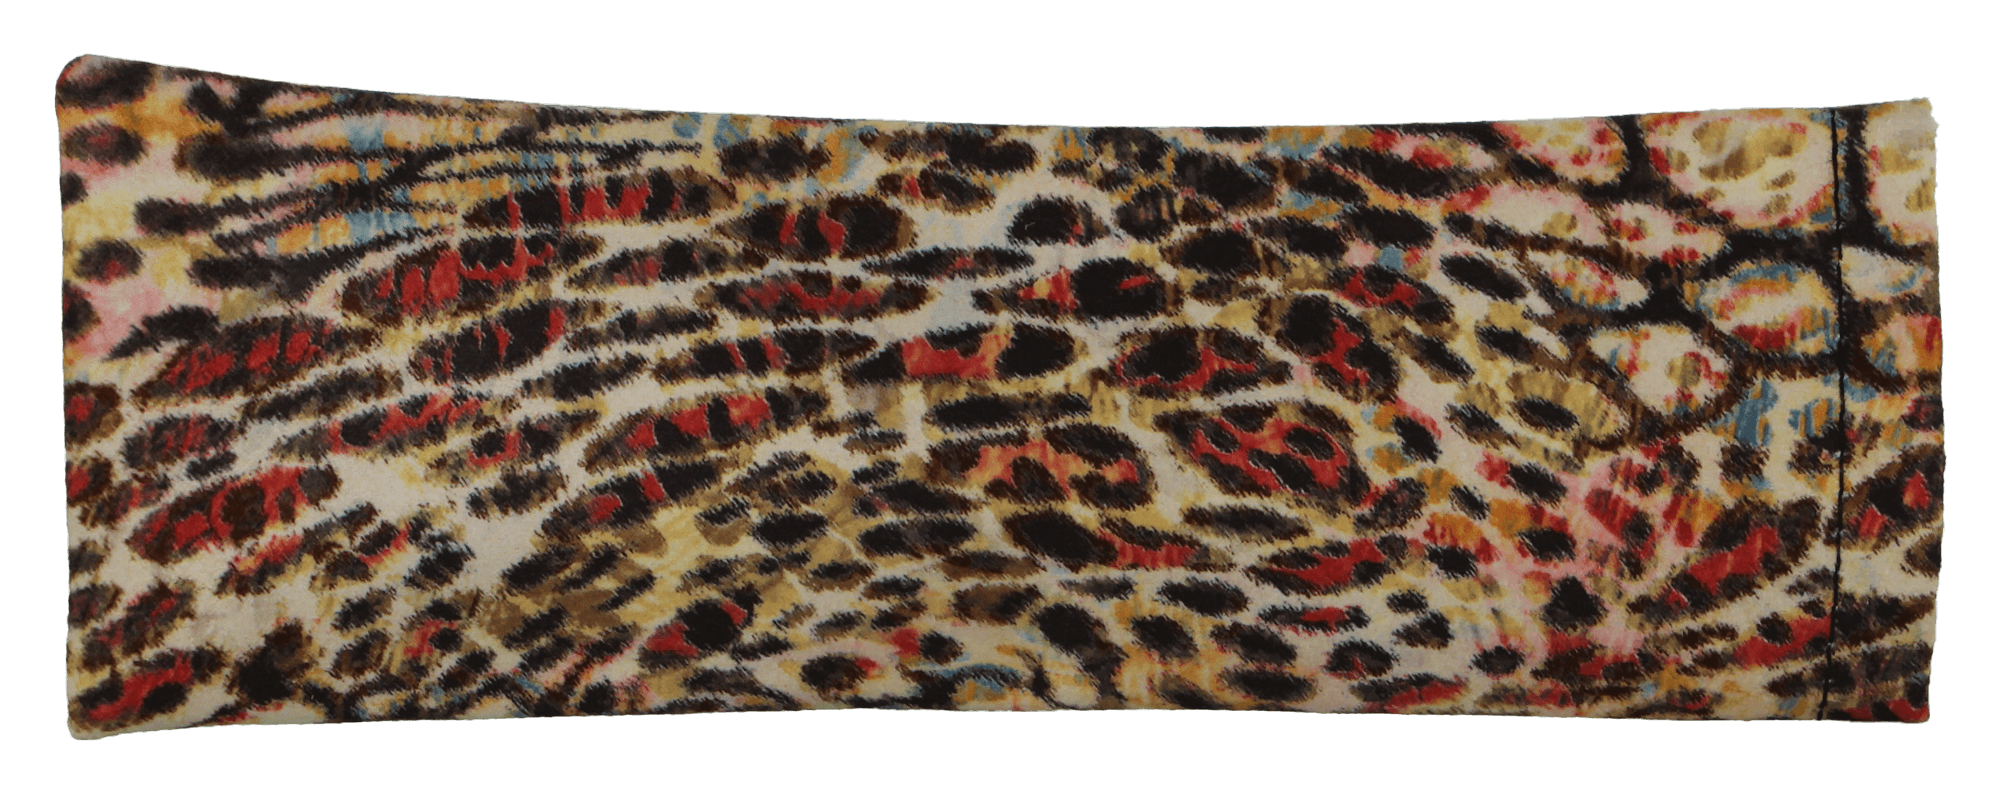 Fertiglesebrille 04891 Leoparden-Print matt +2,50 Dioptrien